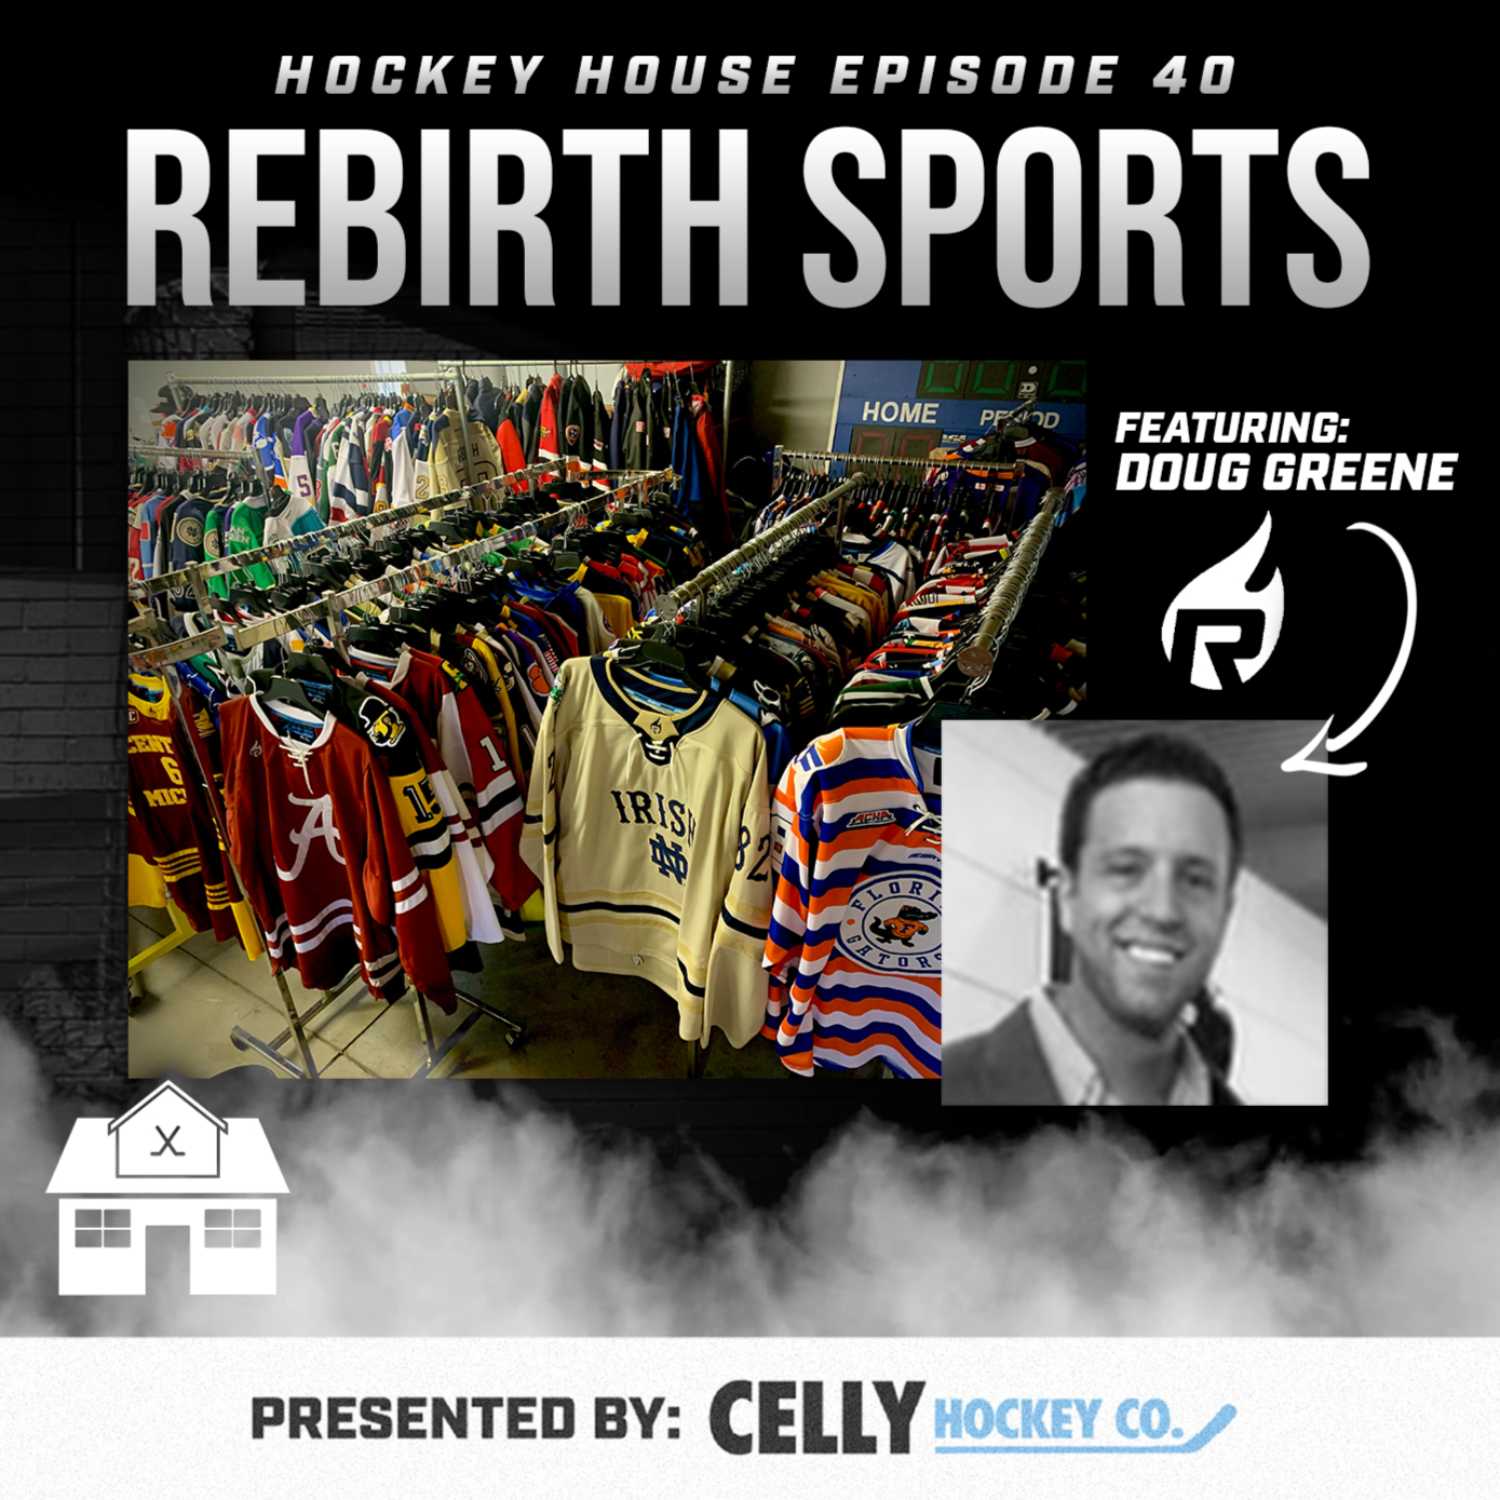 Hockey House Episode 40: Rebirth Sports